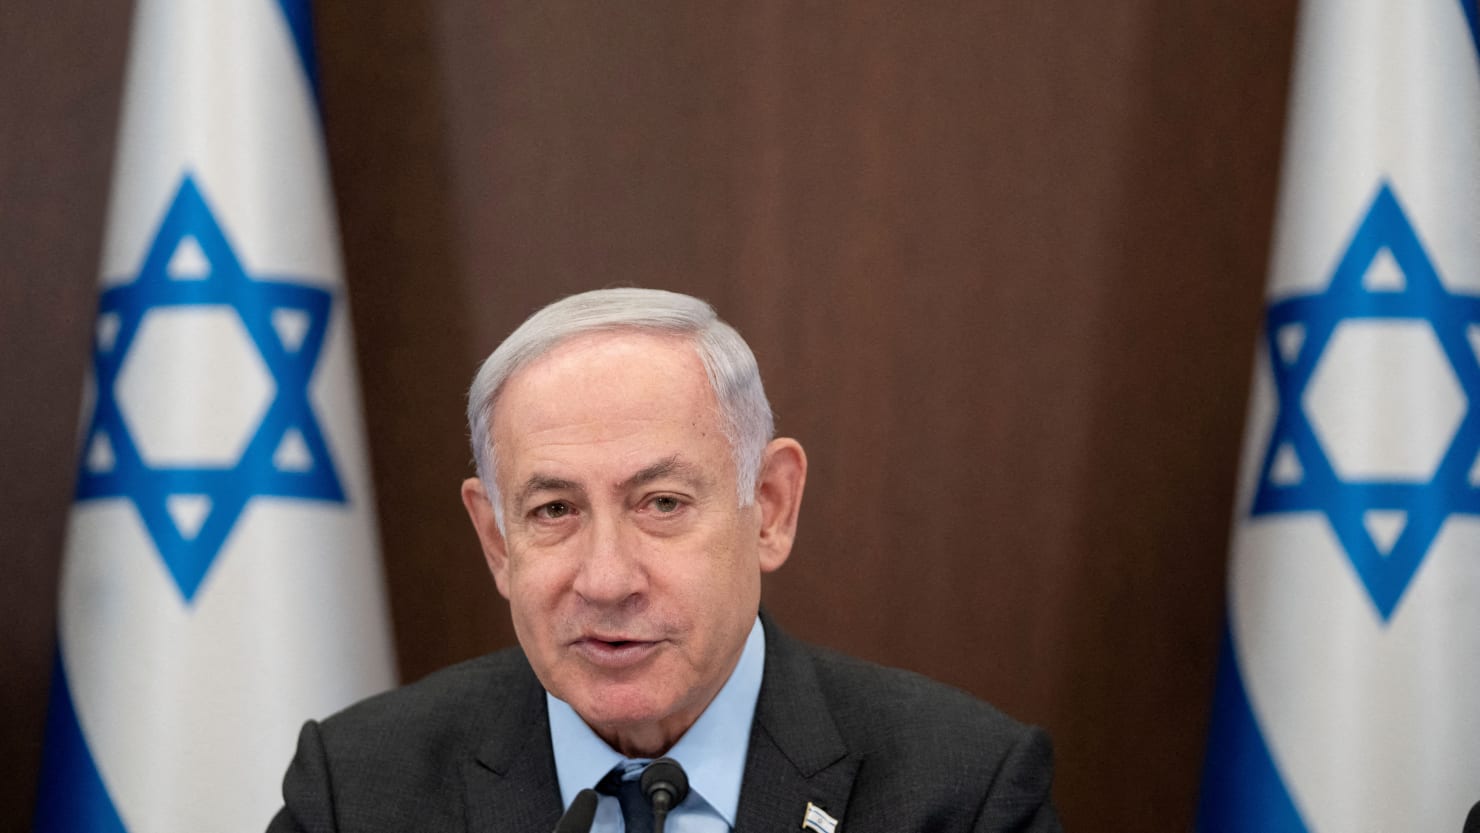 Israeli Prime Minister Benjamin Netanyahu Slated for Pacemaker Surgery